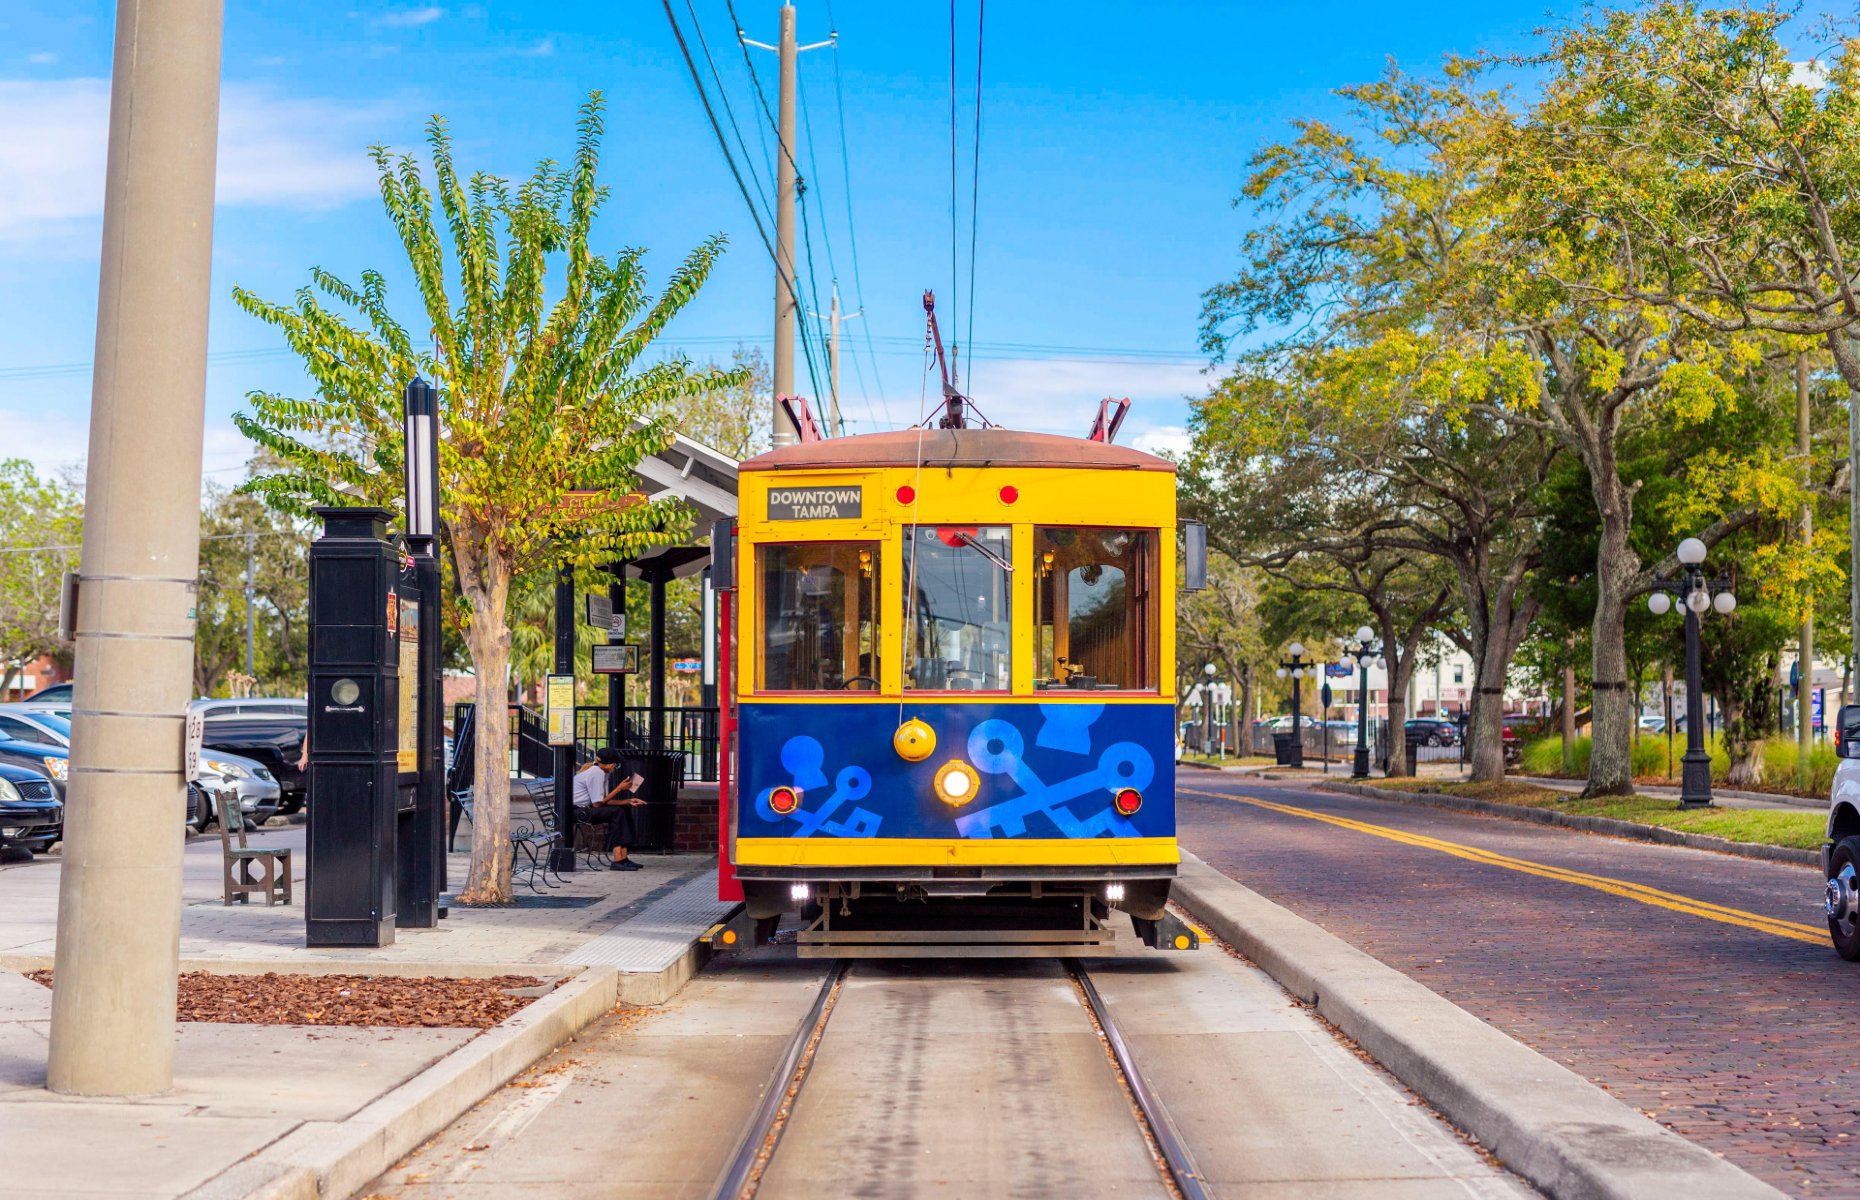 The iconic yellow streetcar in Ybor City (Image: Keir Magoulas | Visit Tampa Bay)